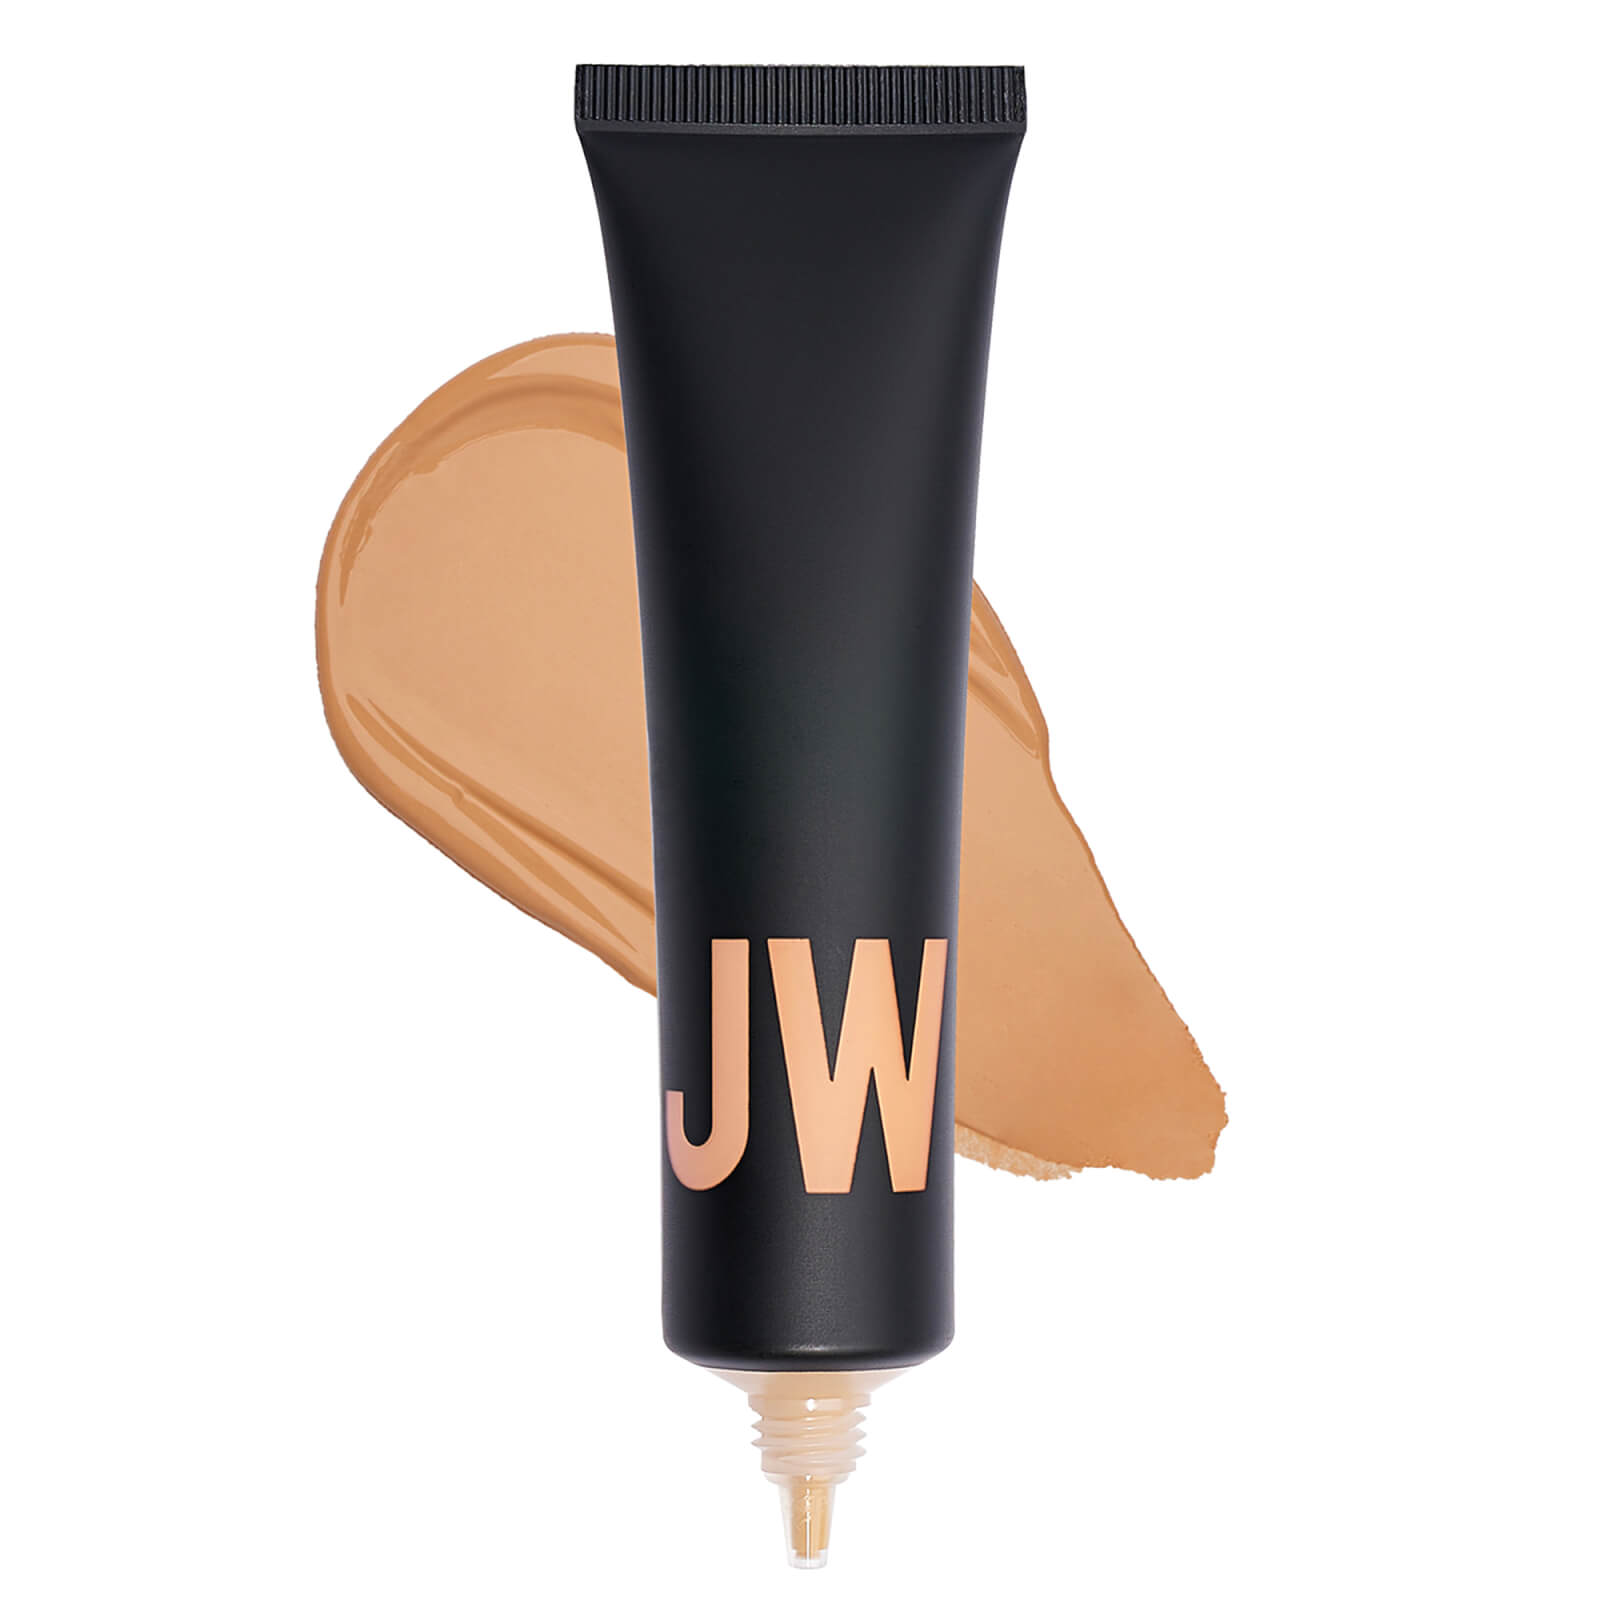 Jason Wu Beauty Tinted Moisturizer Meets Cc Cream 30ml (various Shades) - Skin 4